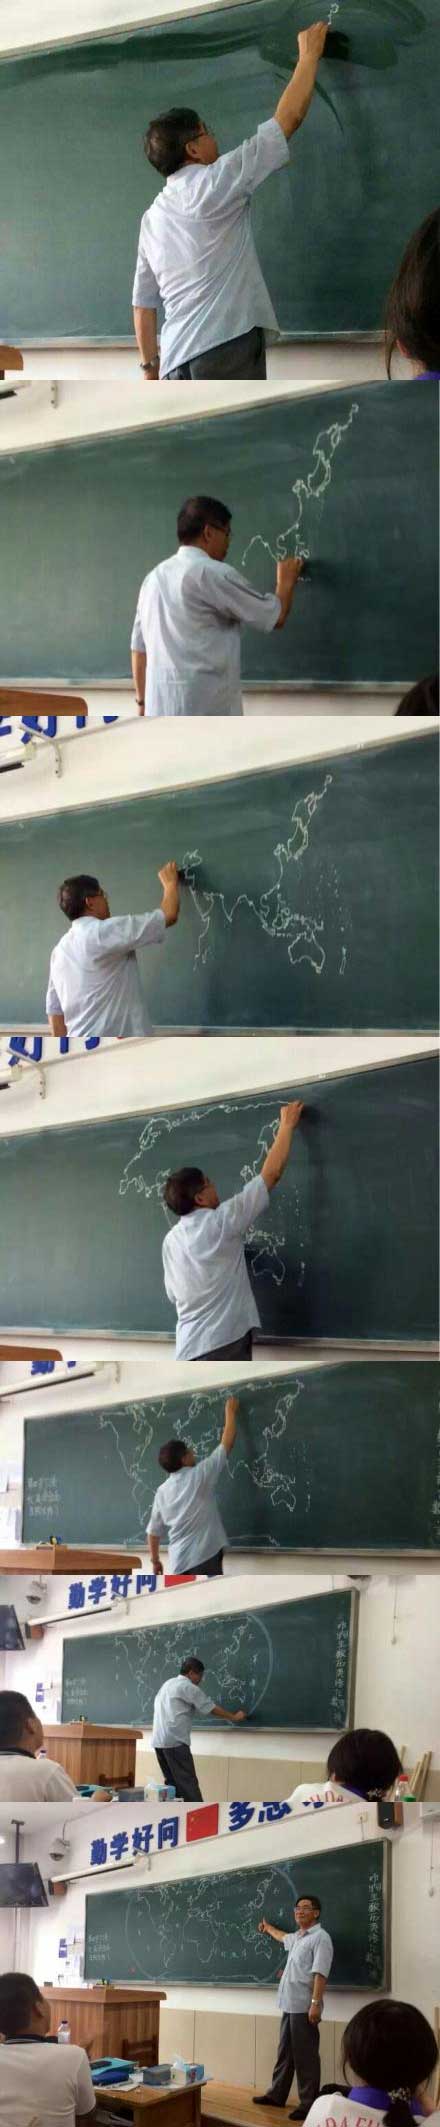 el mejor profesor de geografia